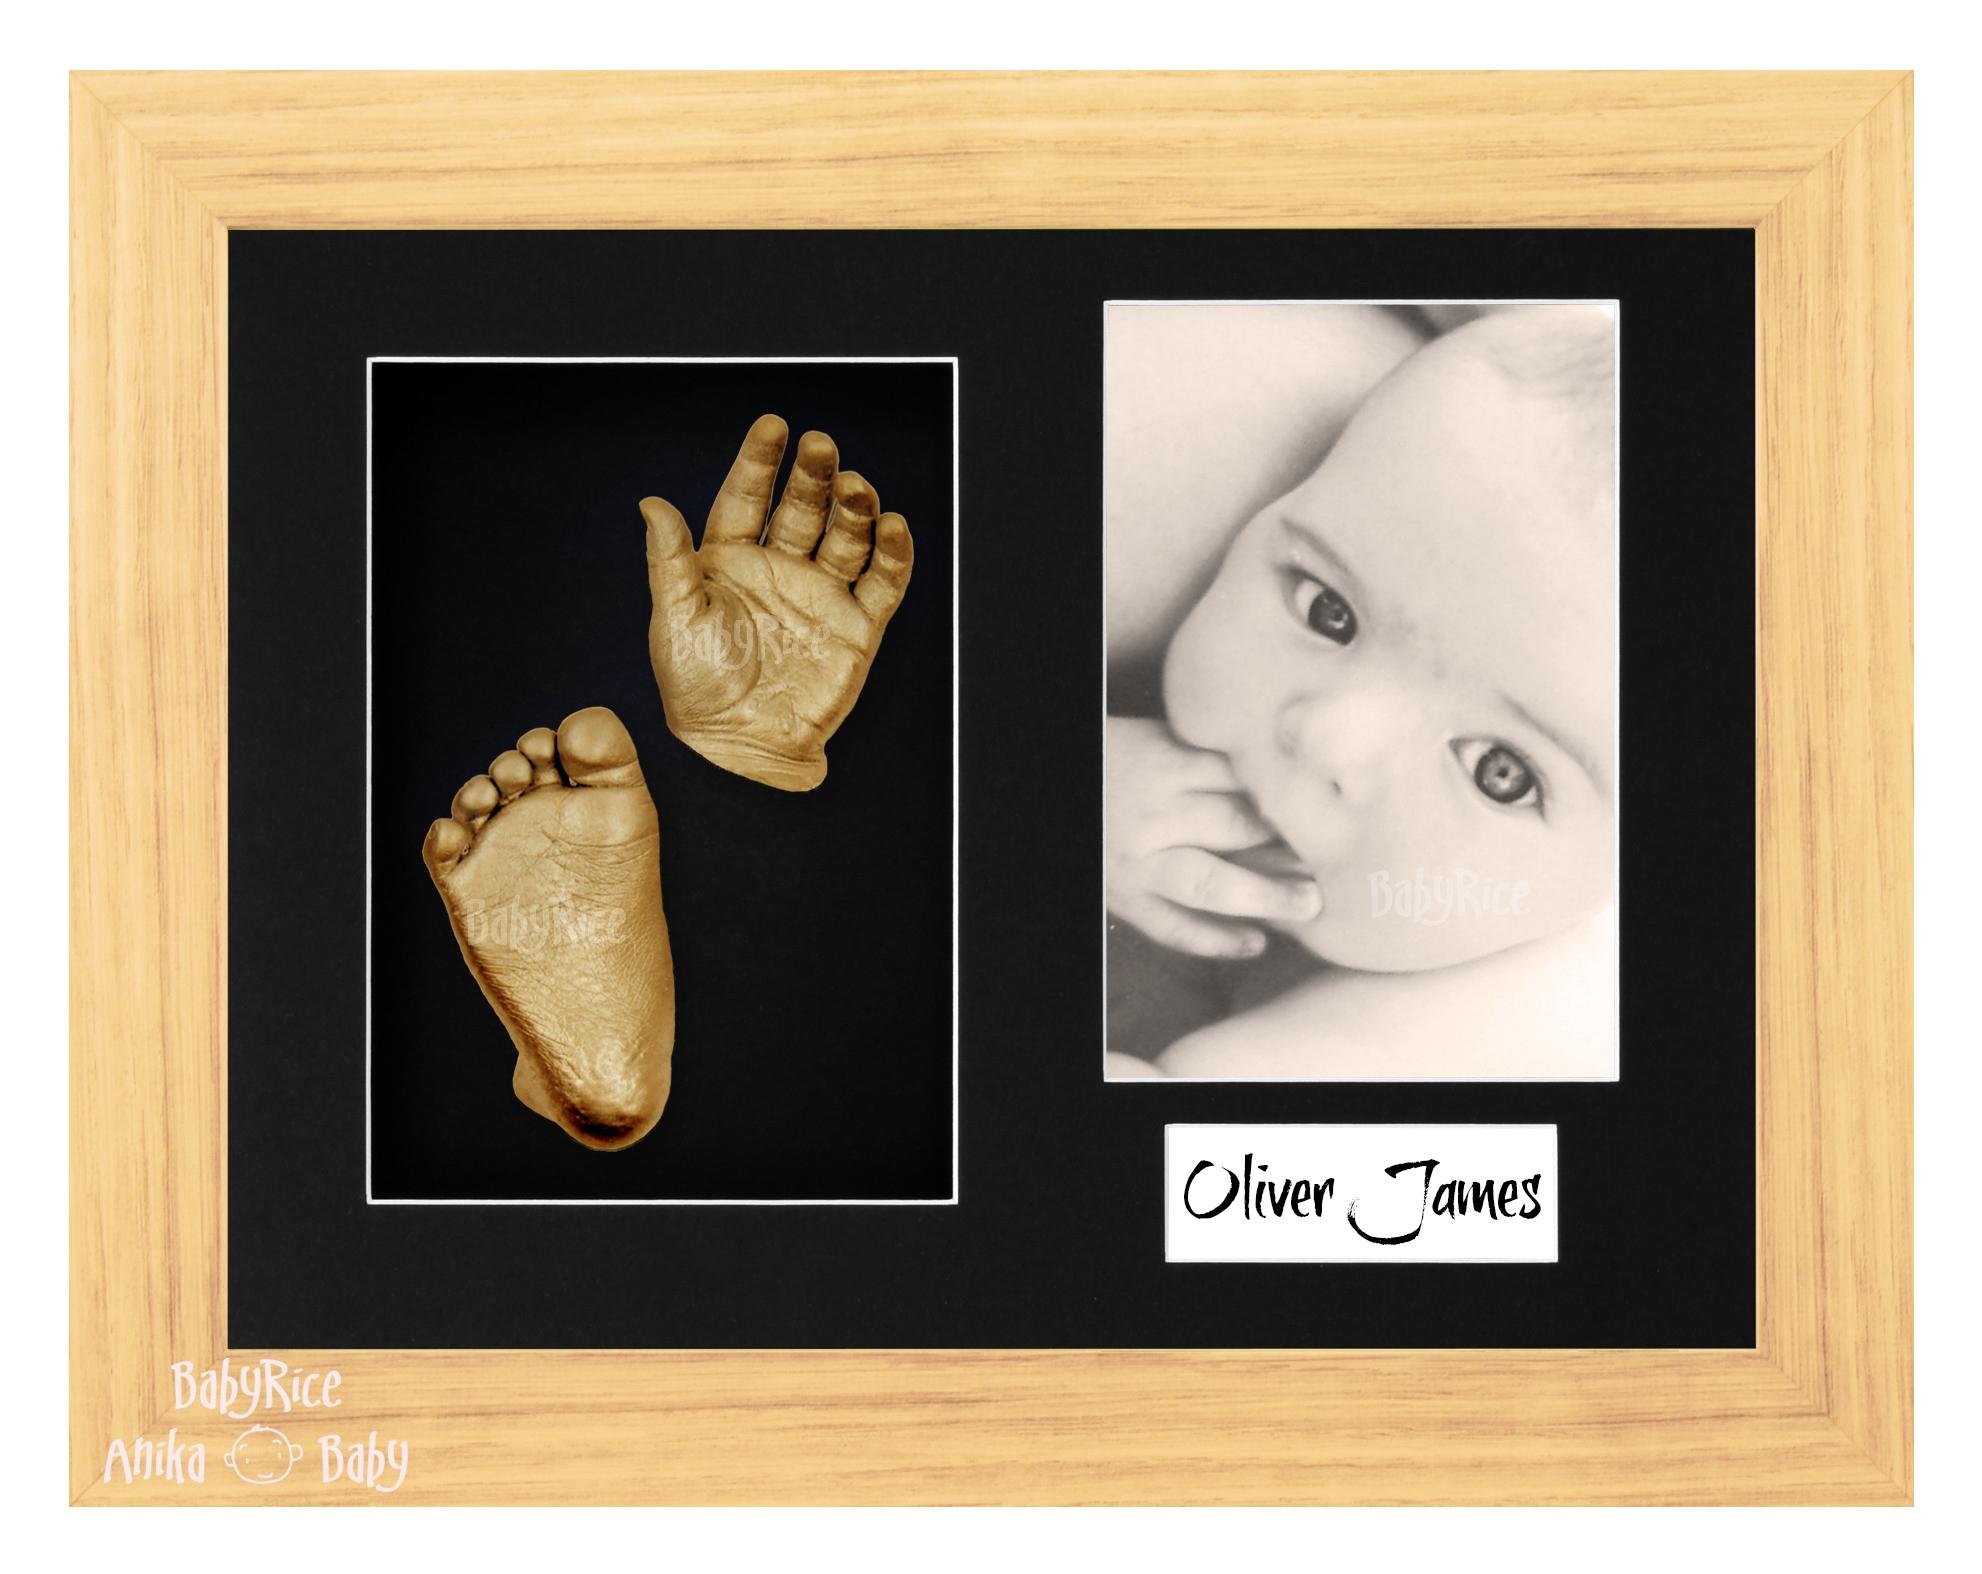 Oak Effect Frame, Black Mount, Golden Baby Hand Foot Cast